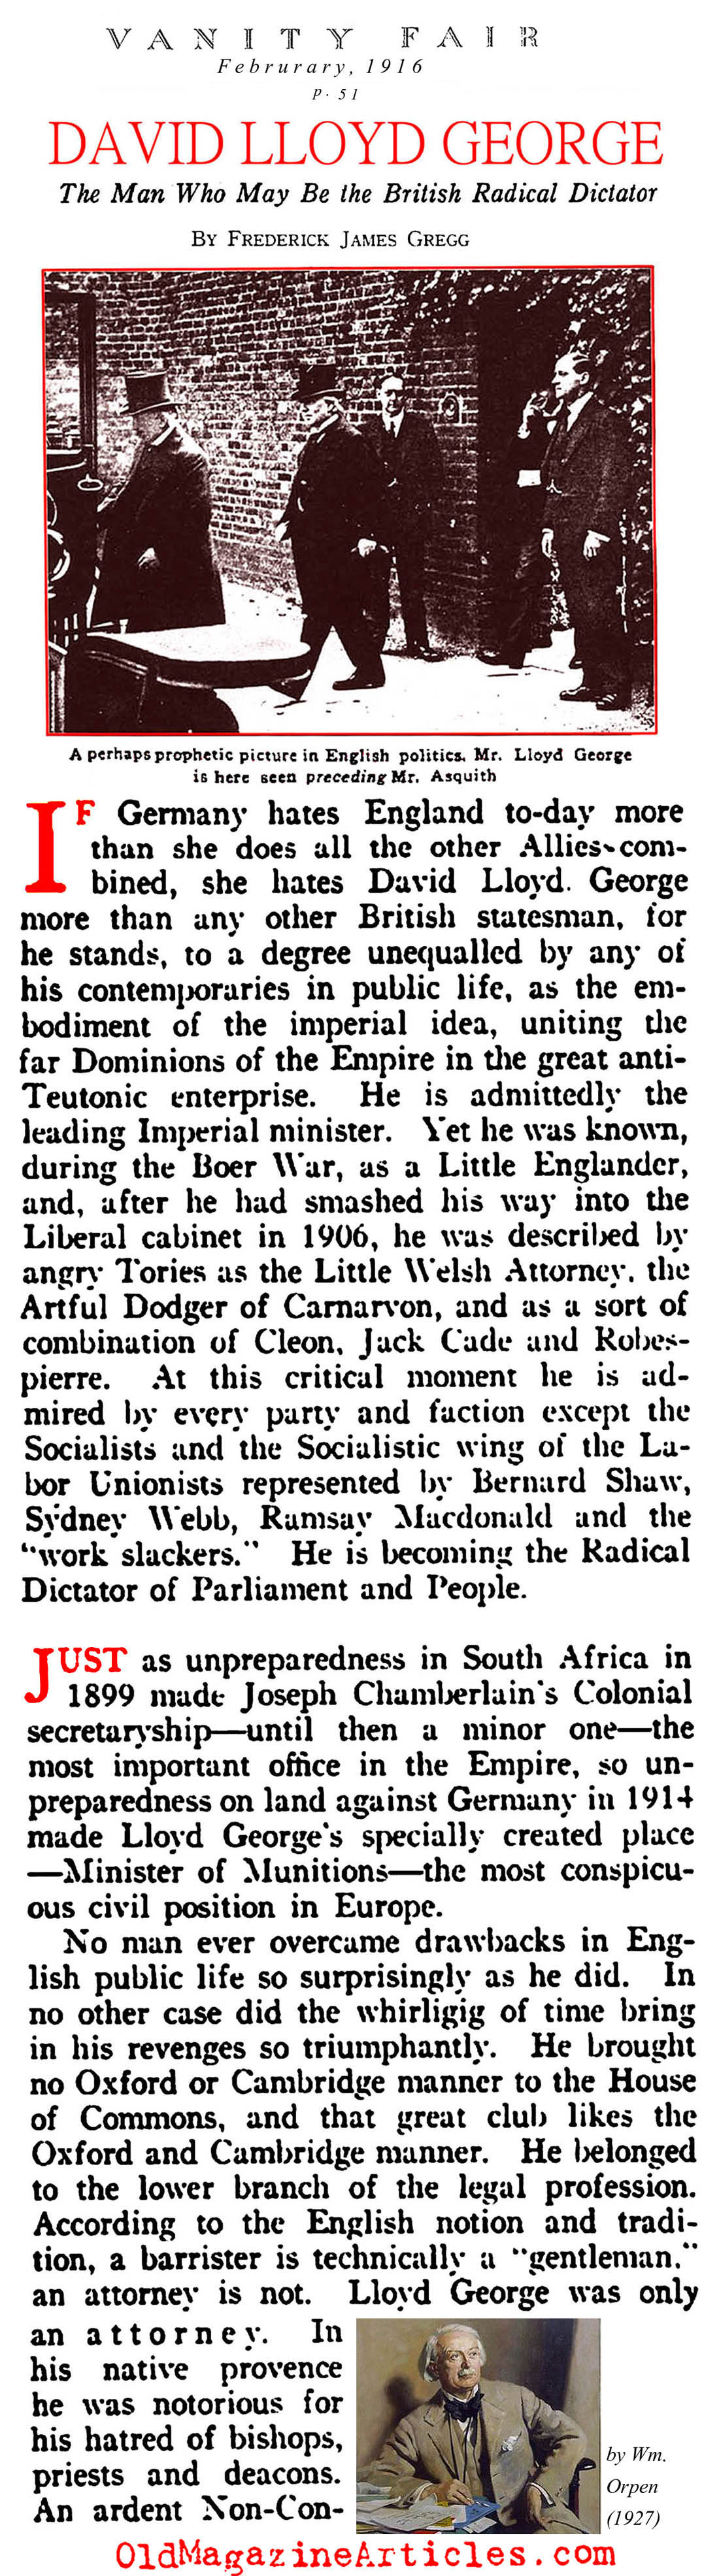 David Lloyd George (Vanity Fair, 1916)